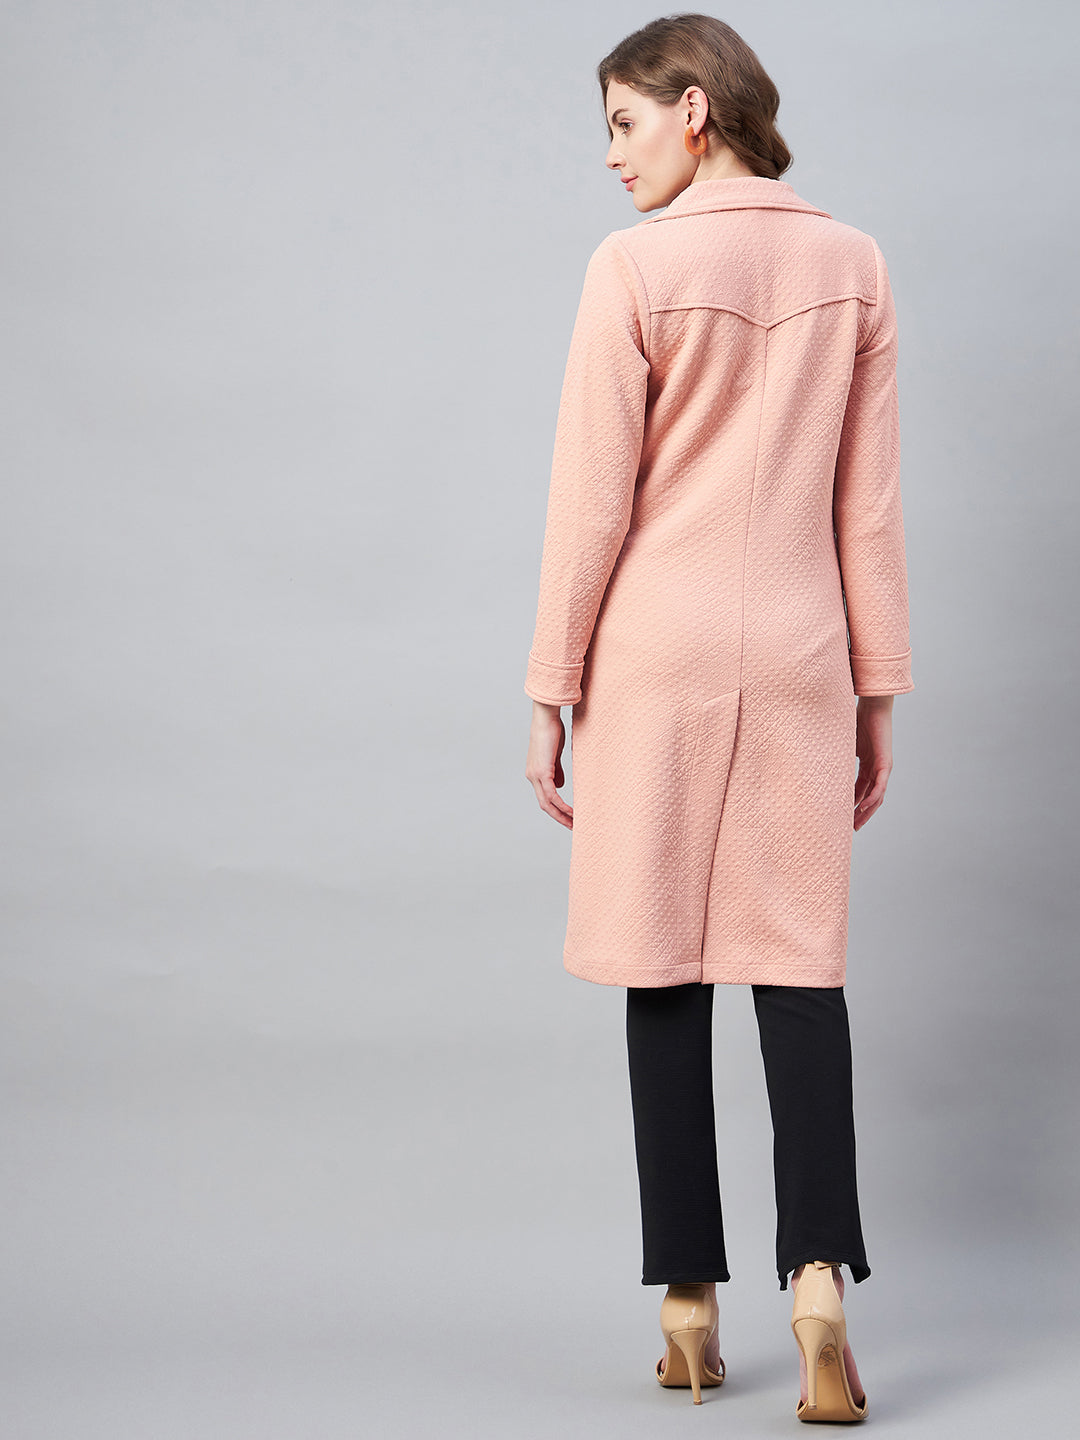 StyleStone Women's Pink Polyester Jacquard Self Design OverCoat